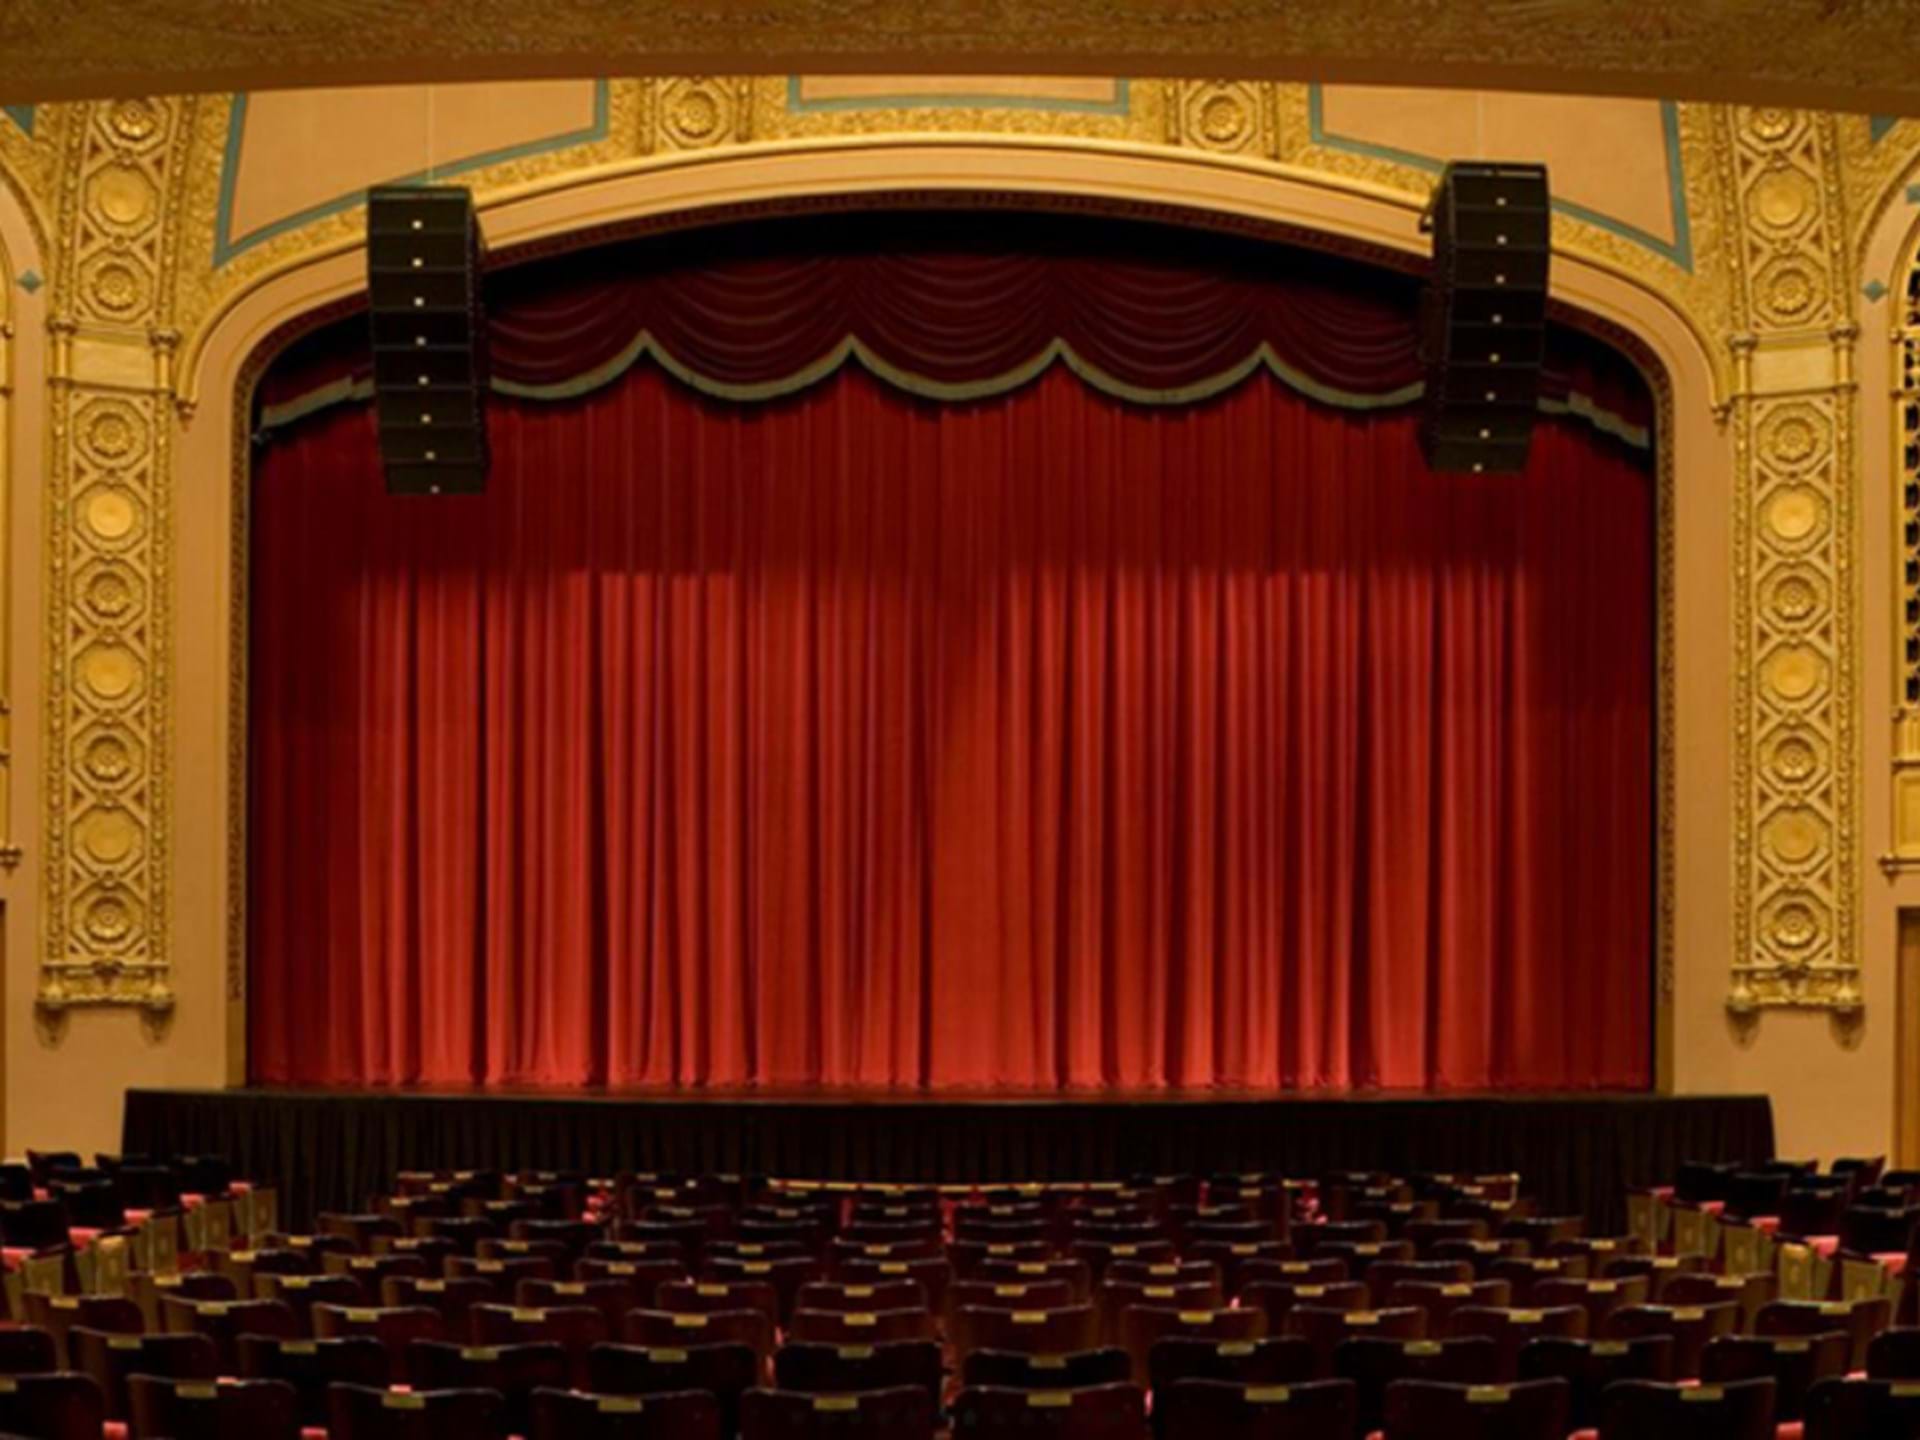 1923 Theater, seats 1,252